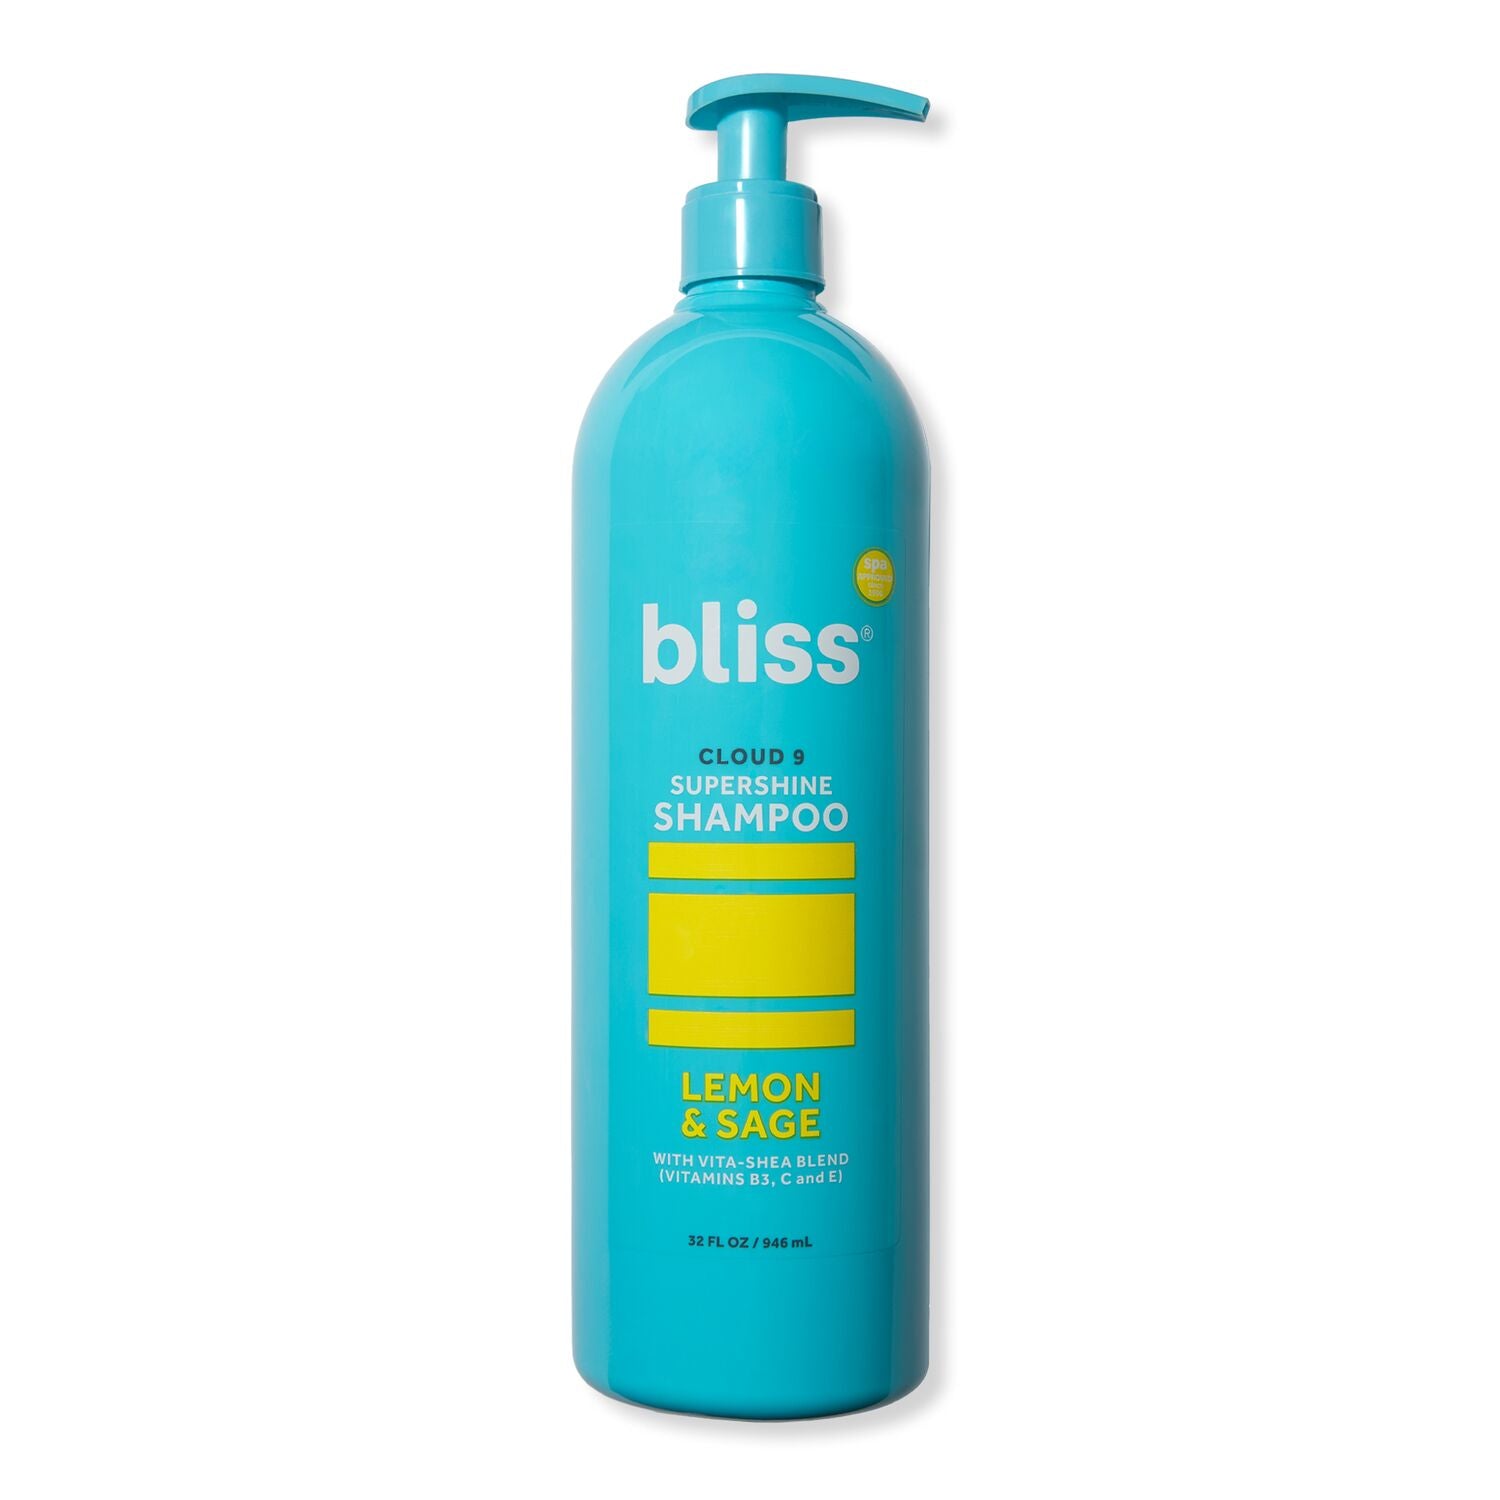 Bliss World Store Supershine Shampoo, Lemon & Sage With Vita-shea Blend (vitamins B3, C And E) In White